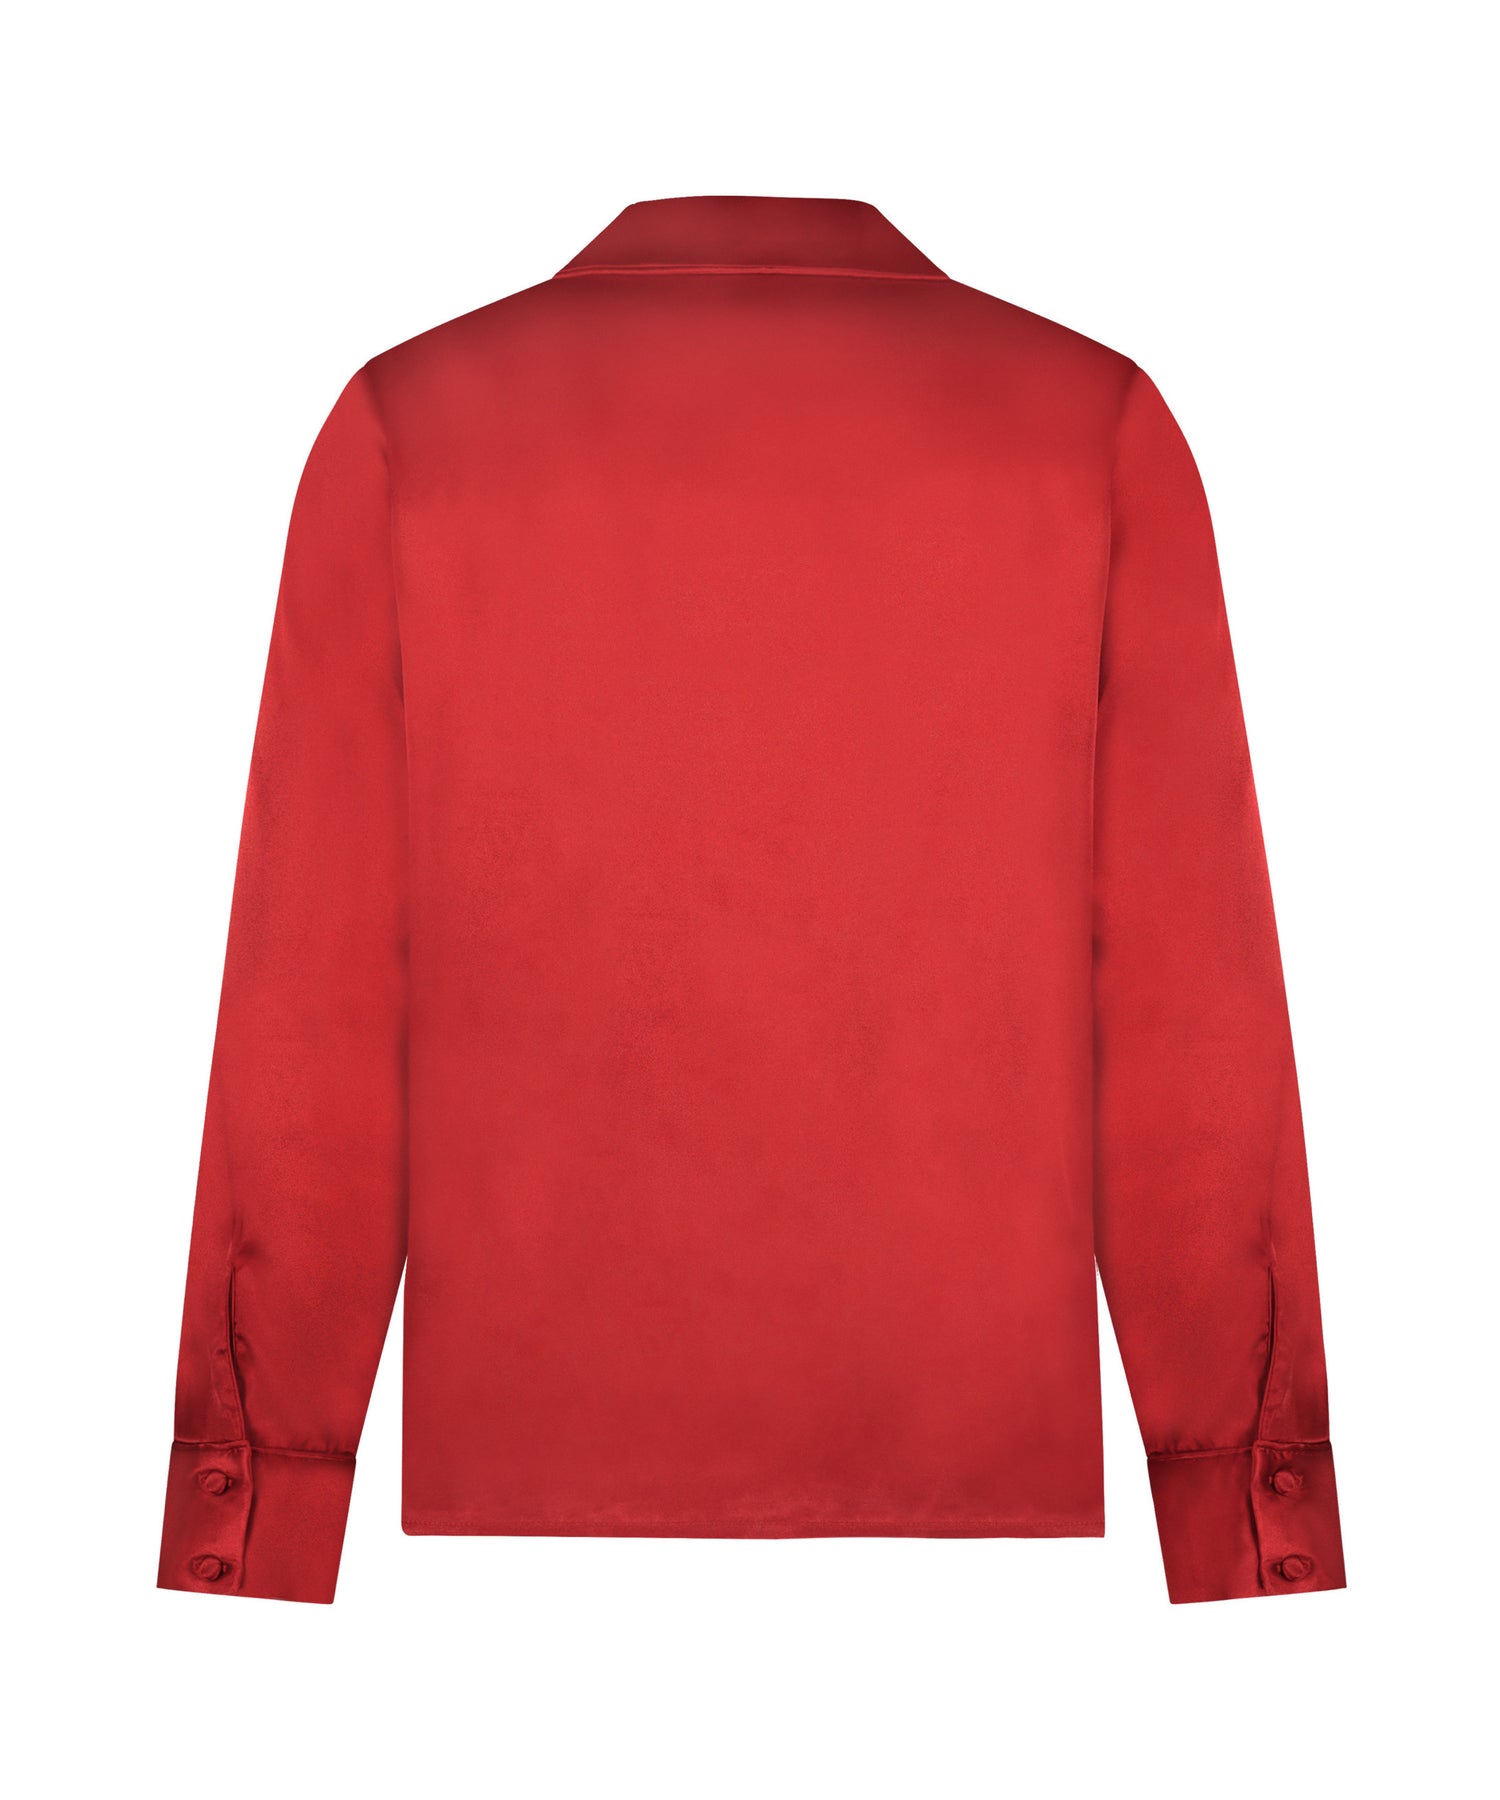 Shirt Long Sleeve Satin Minimal_204261_Tango Red_06